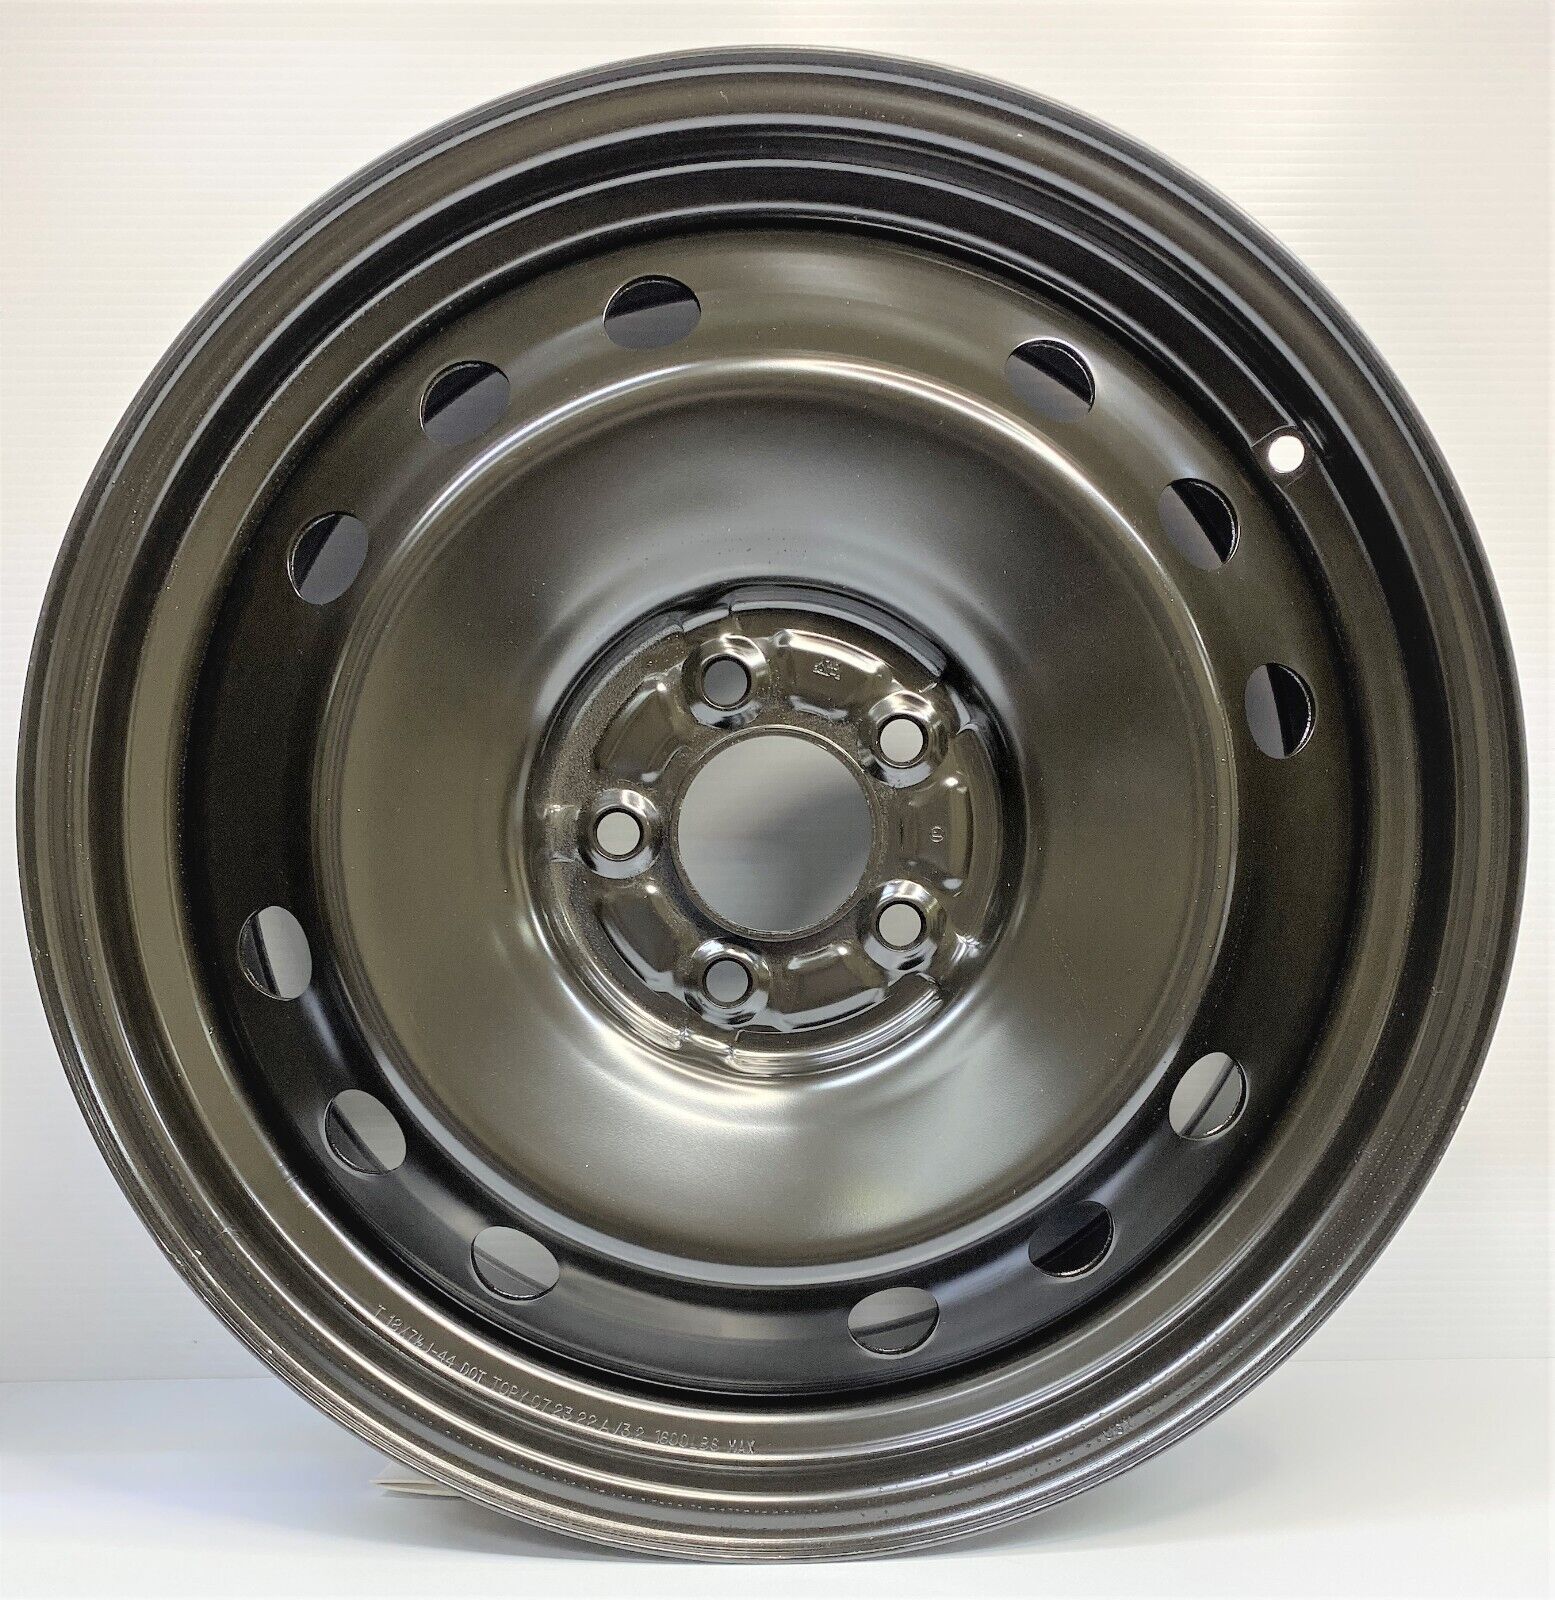 18 Inch  Steel Wheel  Rim  Fits  Chevy Malibu  Volt  Equinox  Impala   42855-70